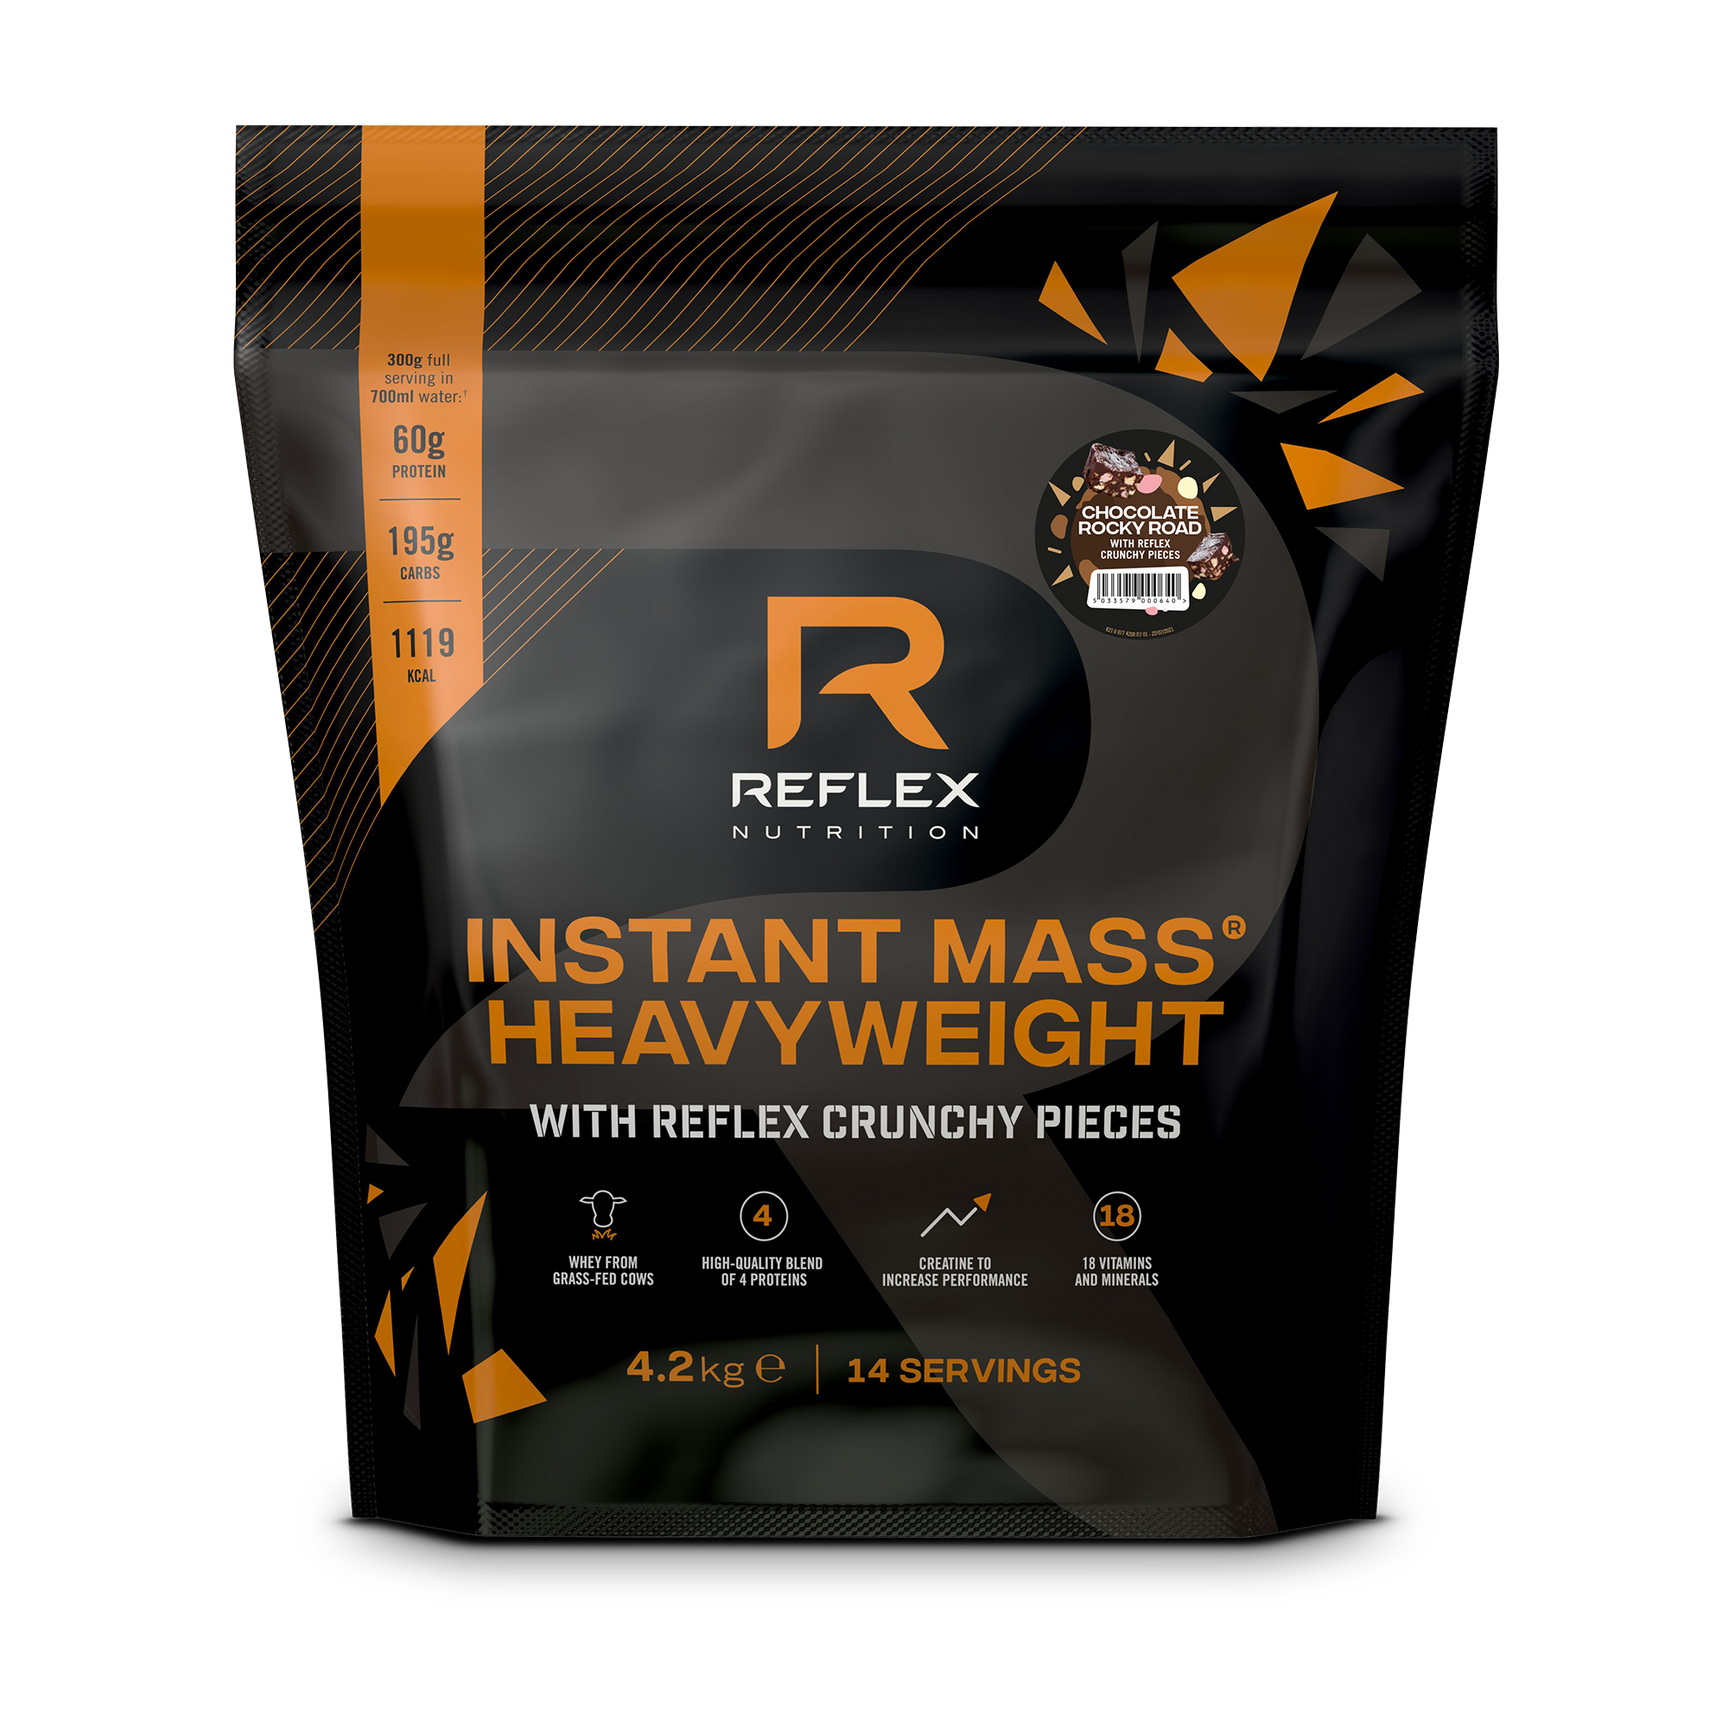 Instant Mass® Heavyweight with Reflex Crunchy Pieces